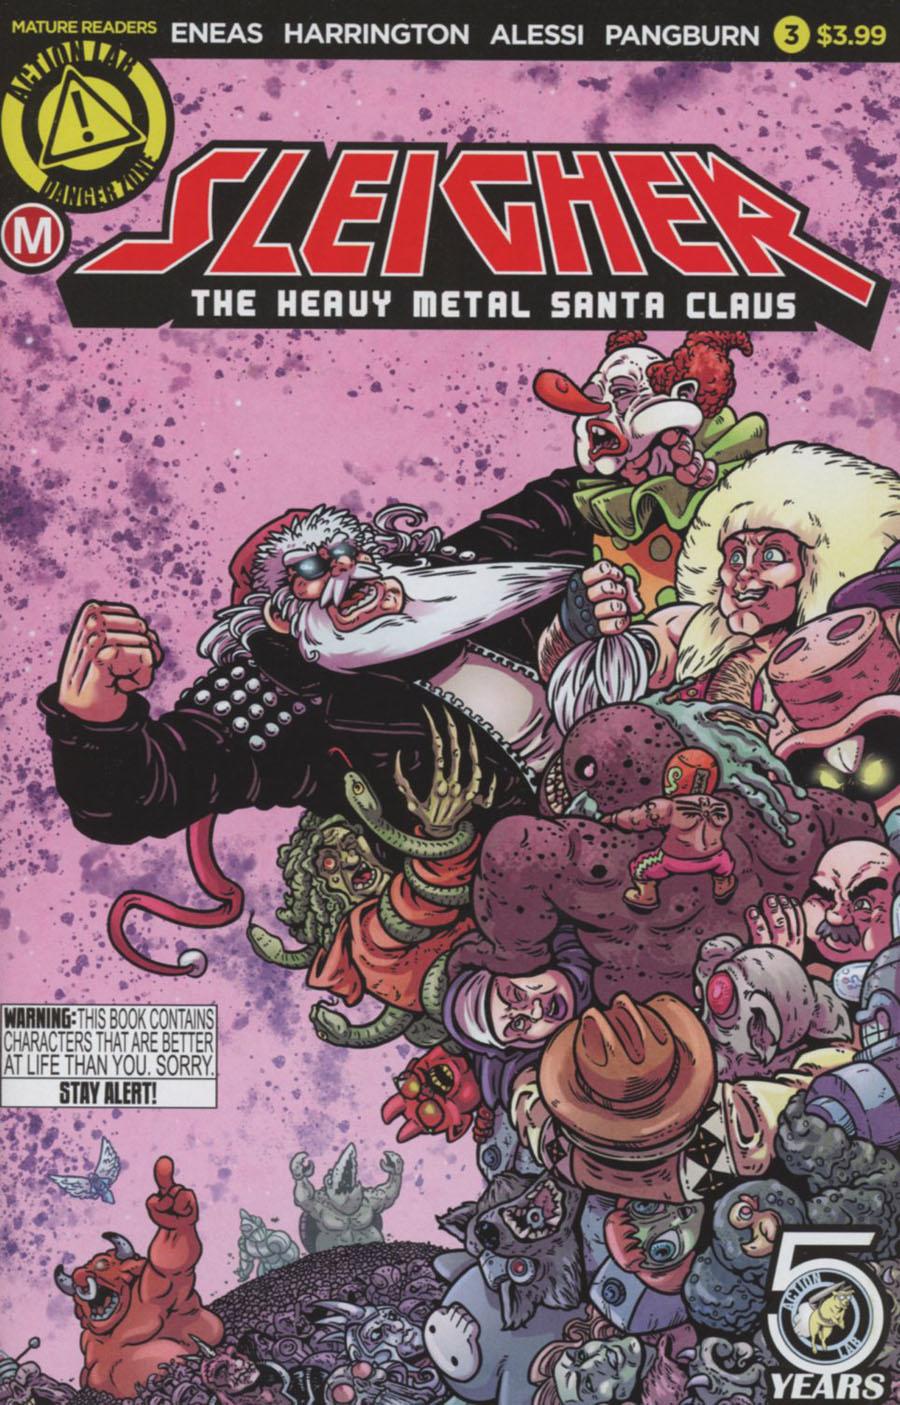 Sleigher Heavy Metal Santa Claus Vol. 1 #3